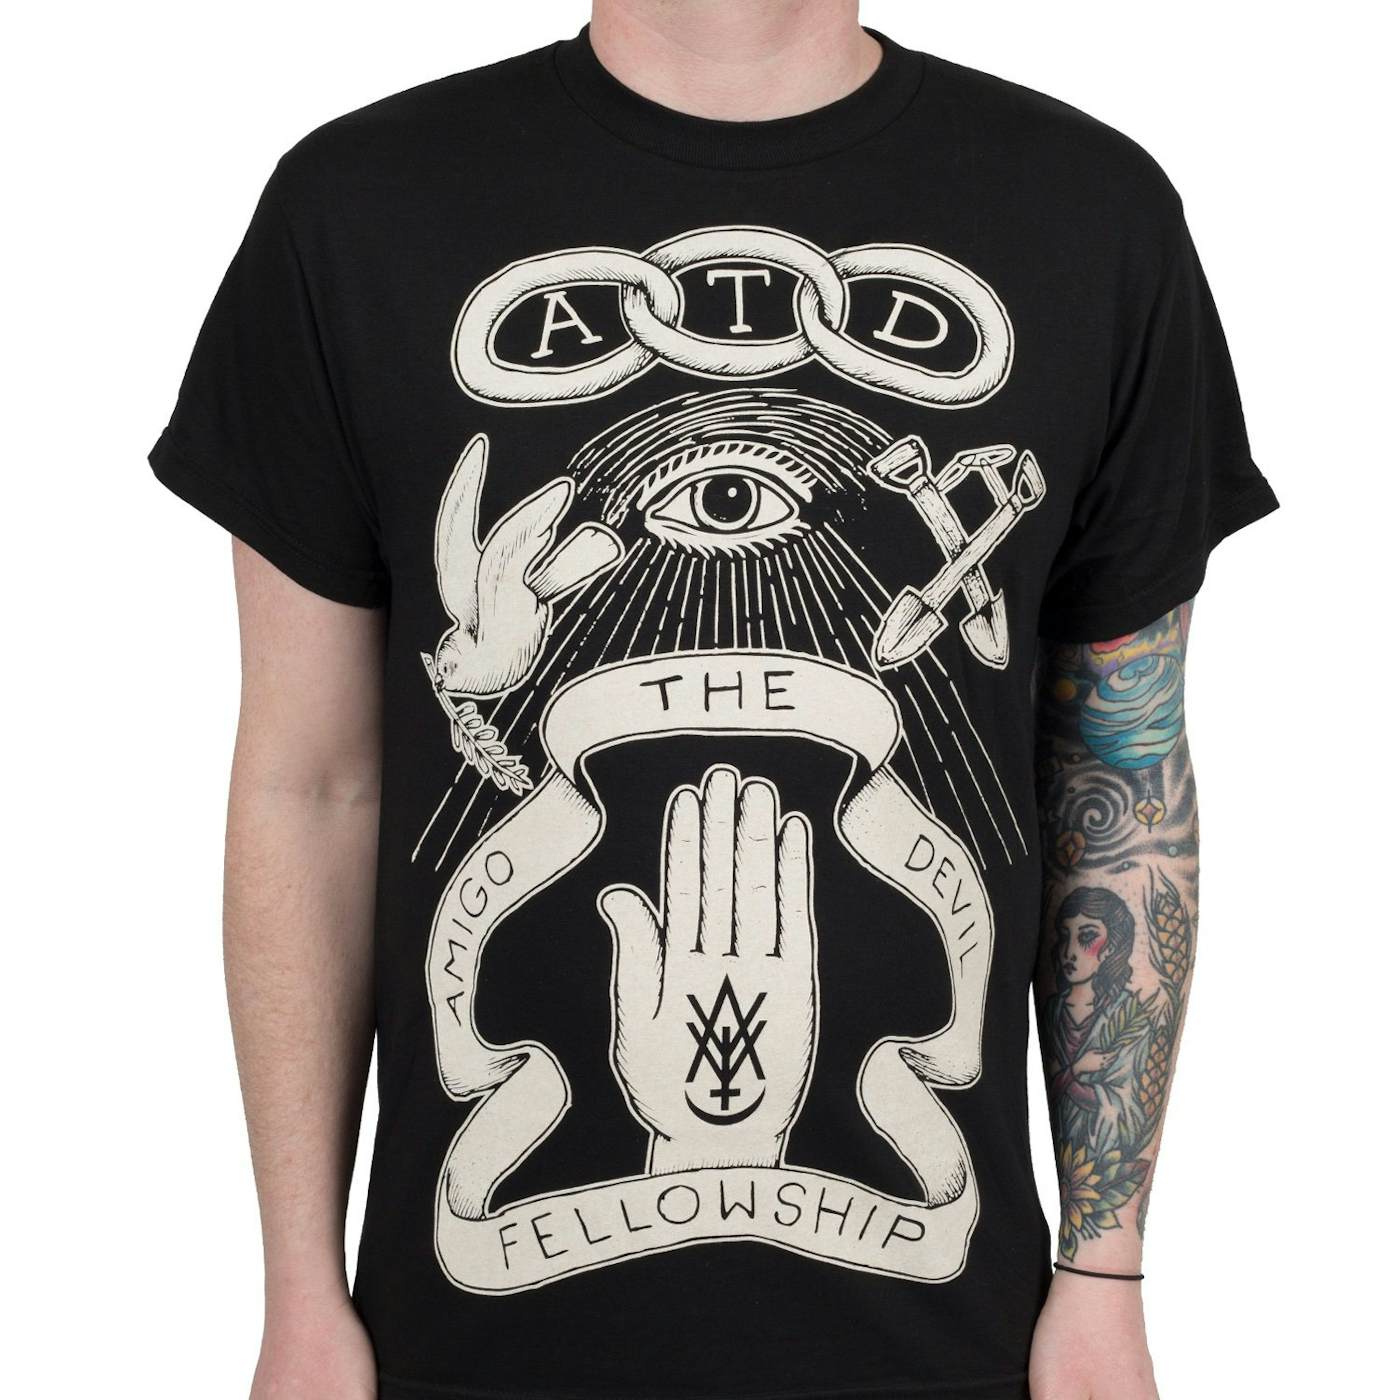 Amigo The Devil "Fellowship" T-Shirt